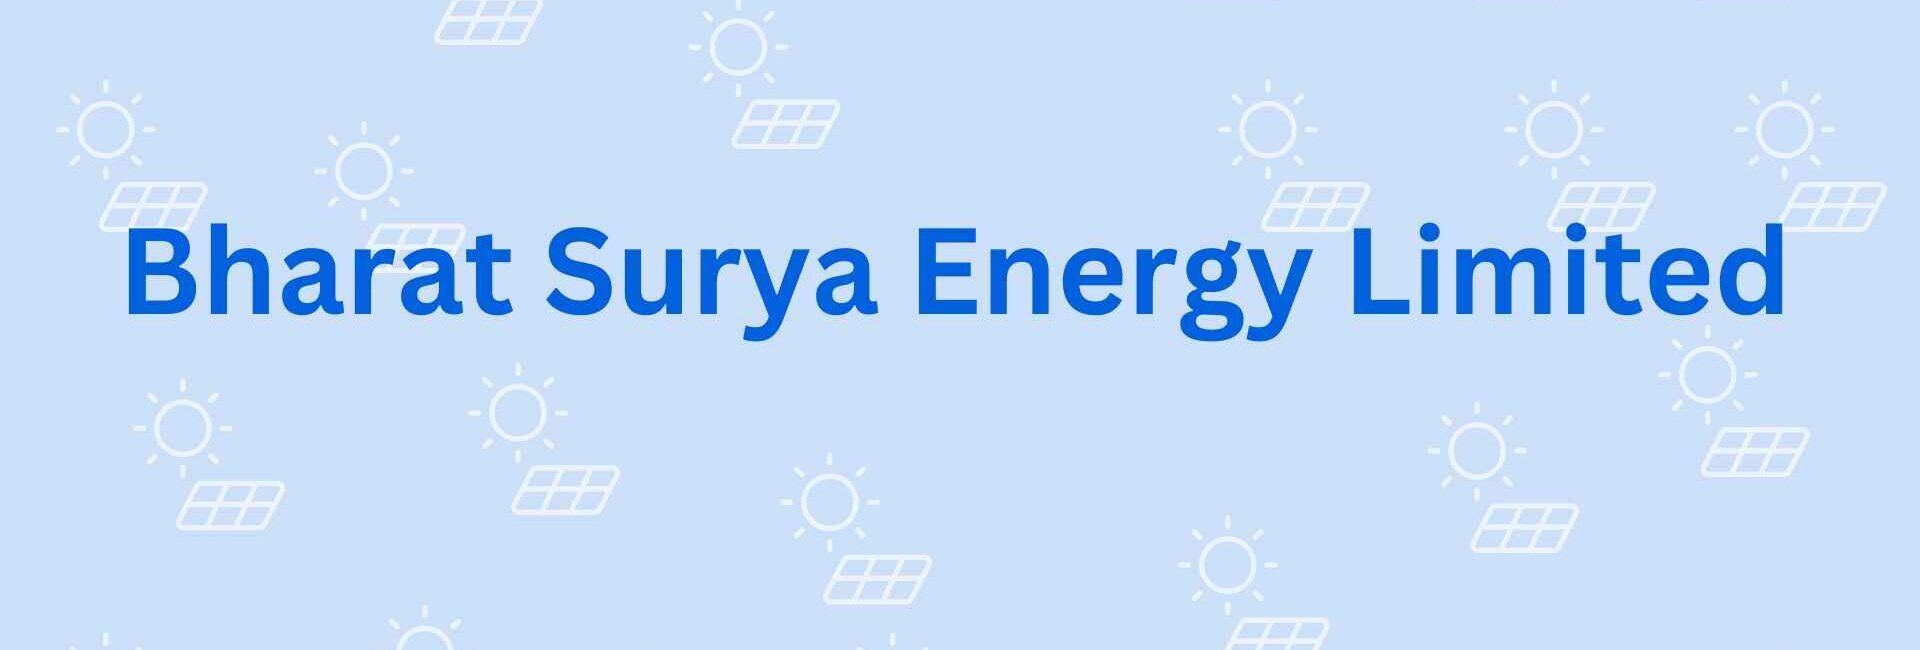 Bharat Surya Energy Limited - Solar System Dealer in Noida